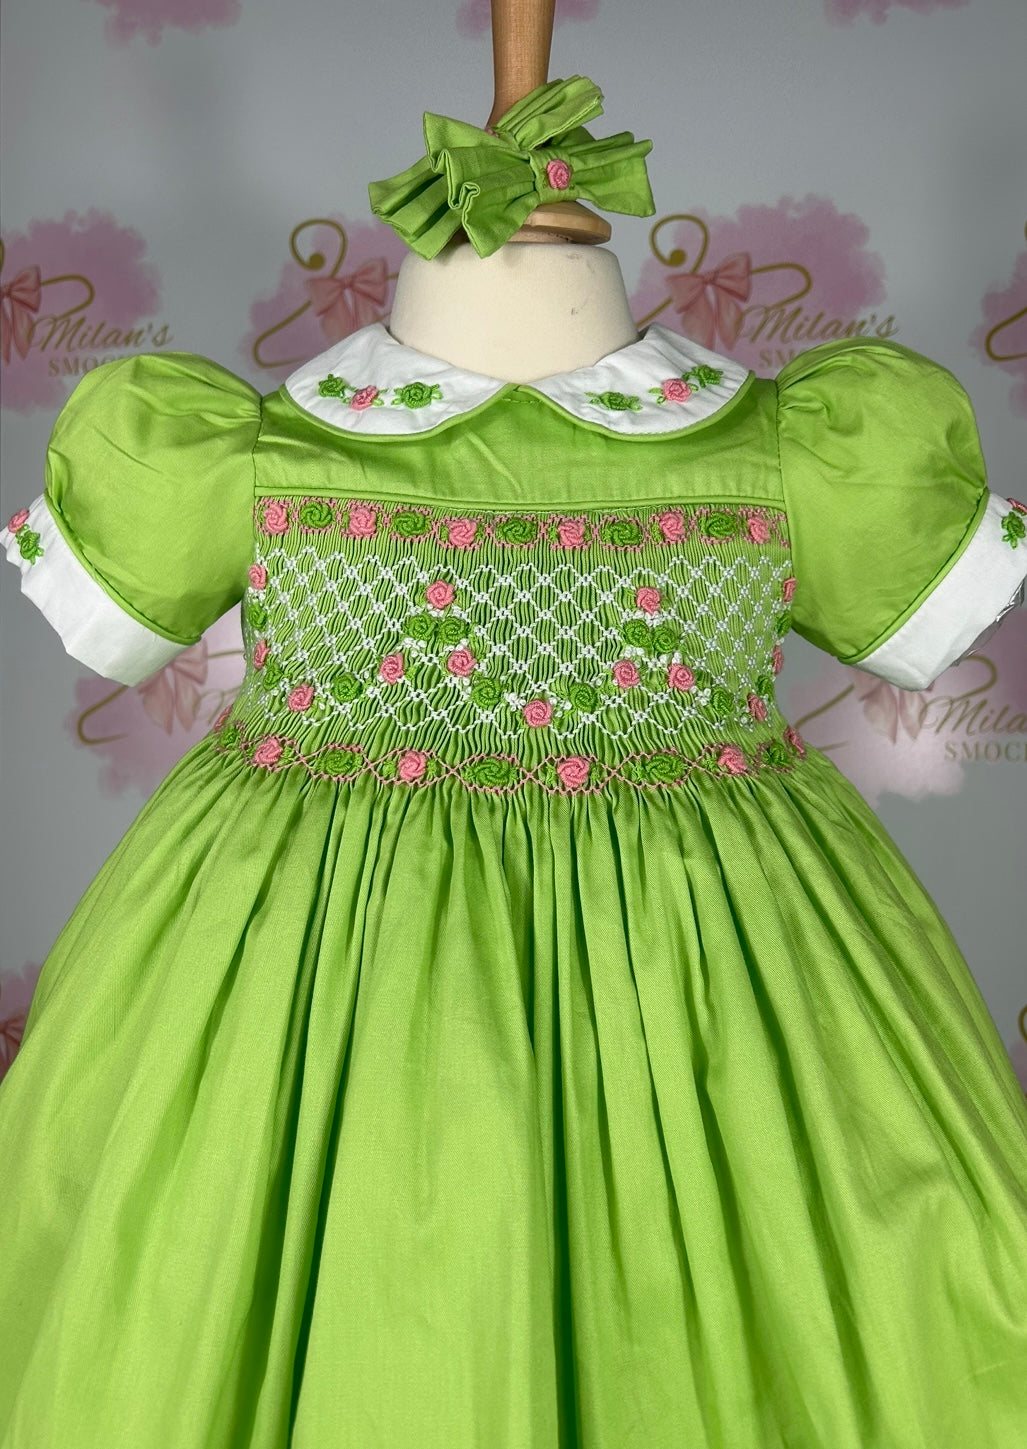 Olive Dress